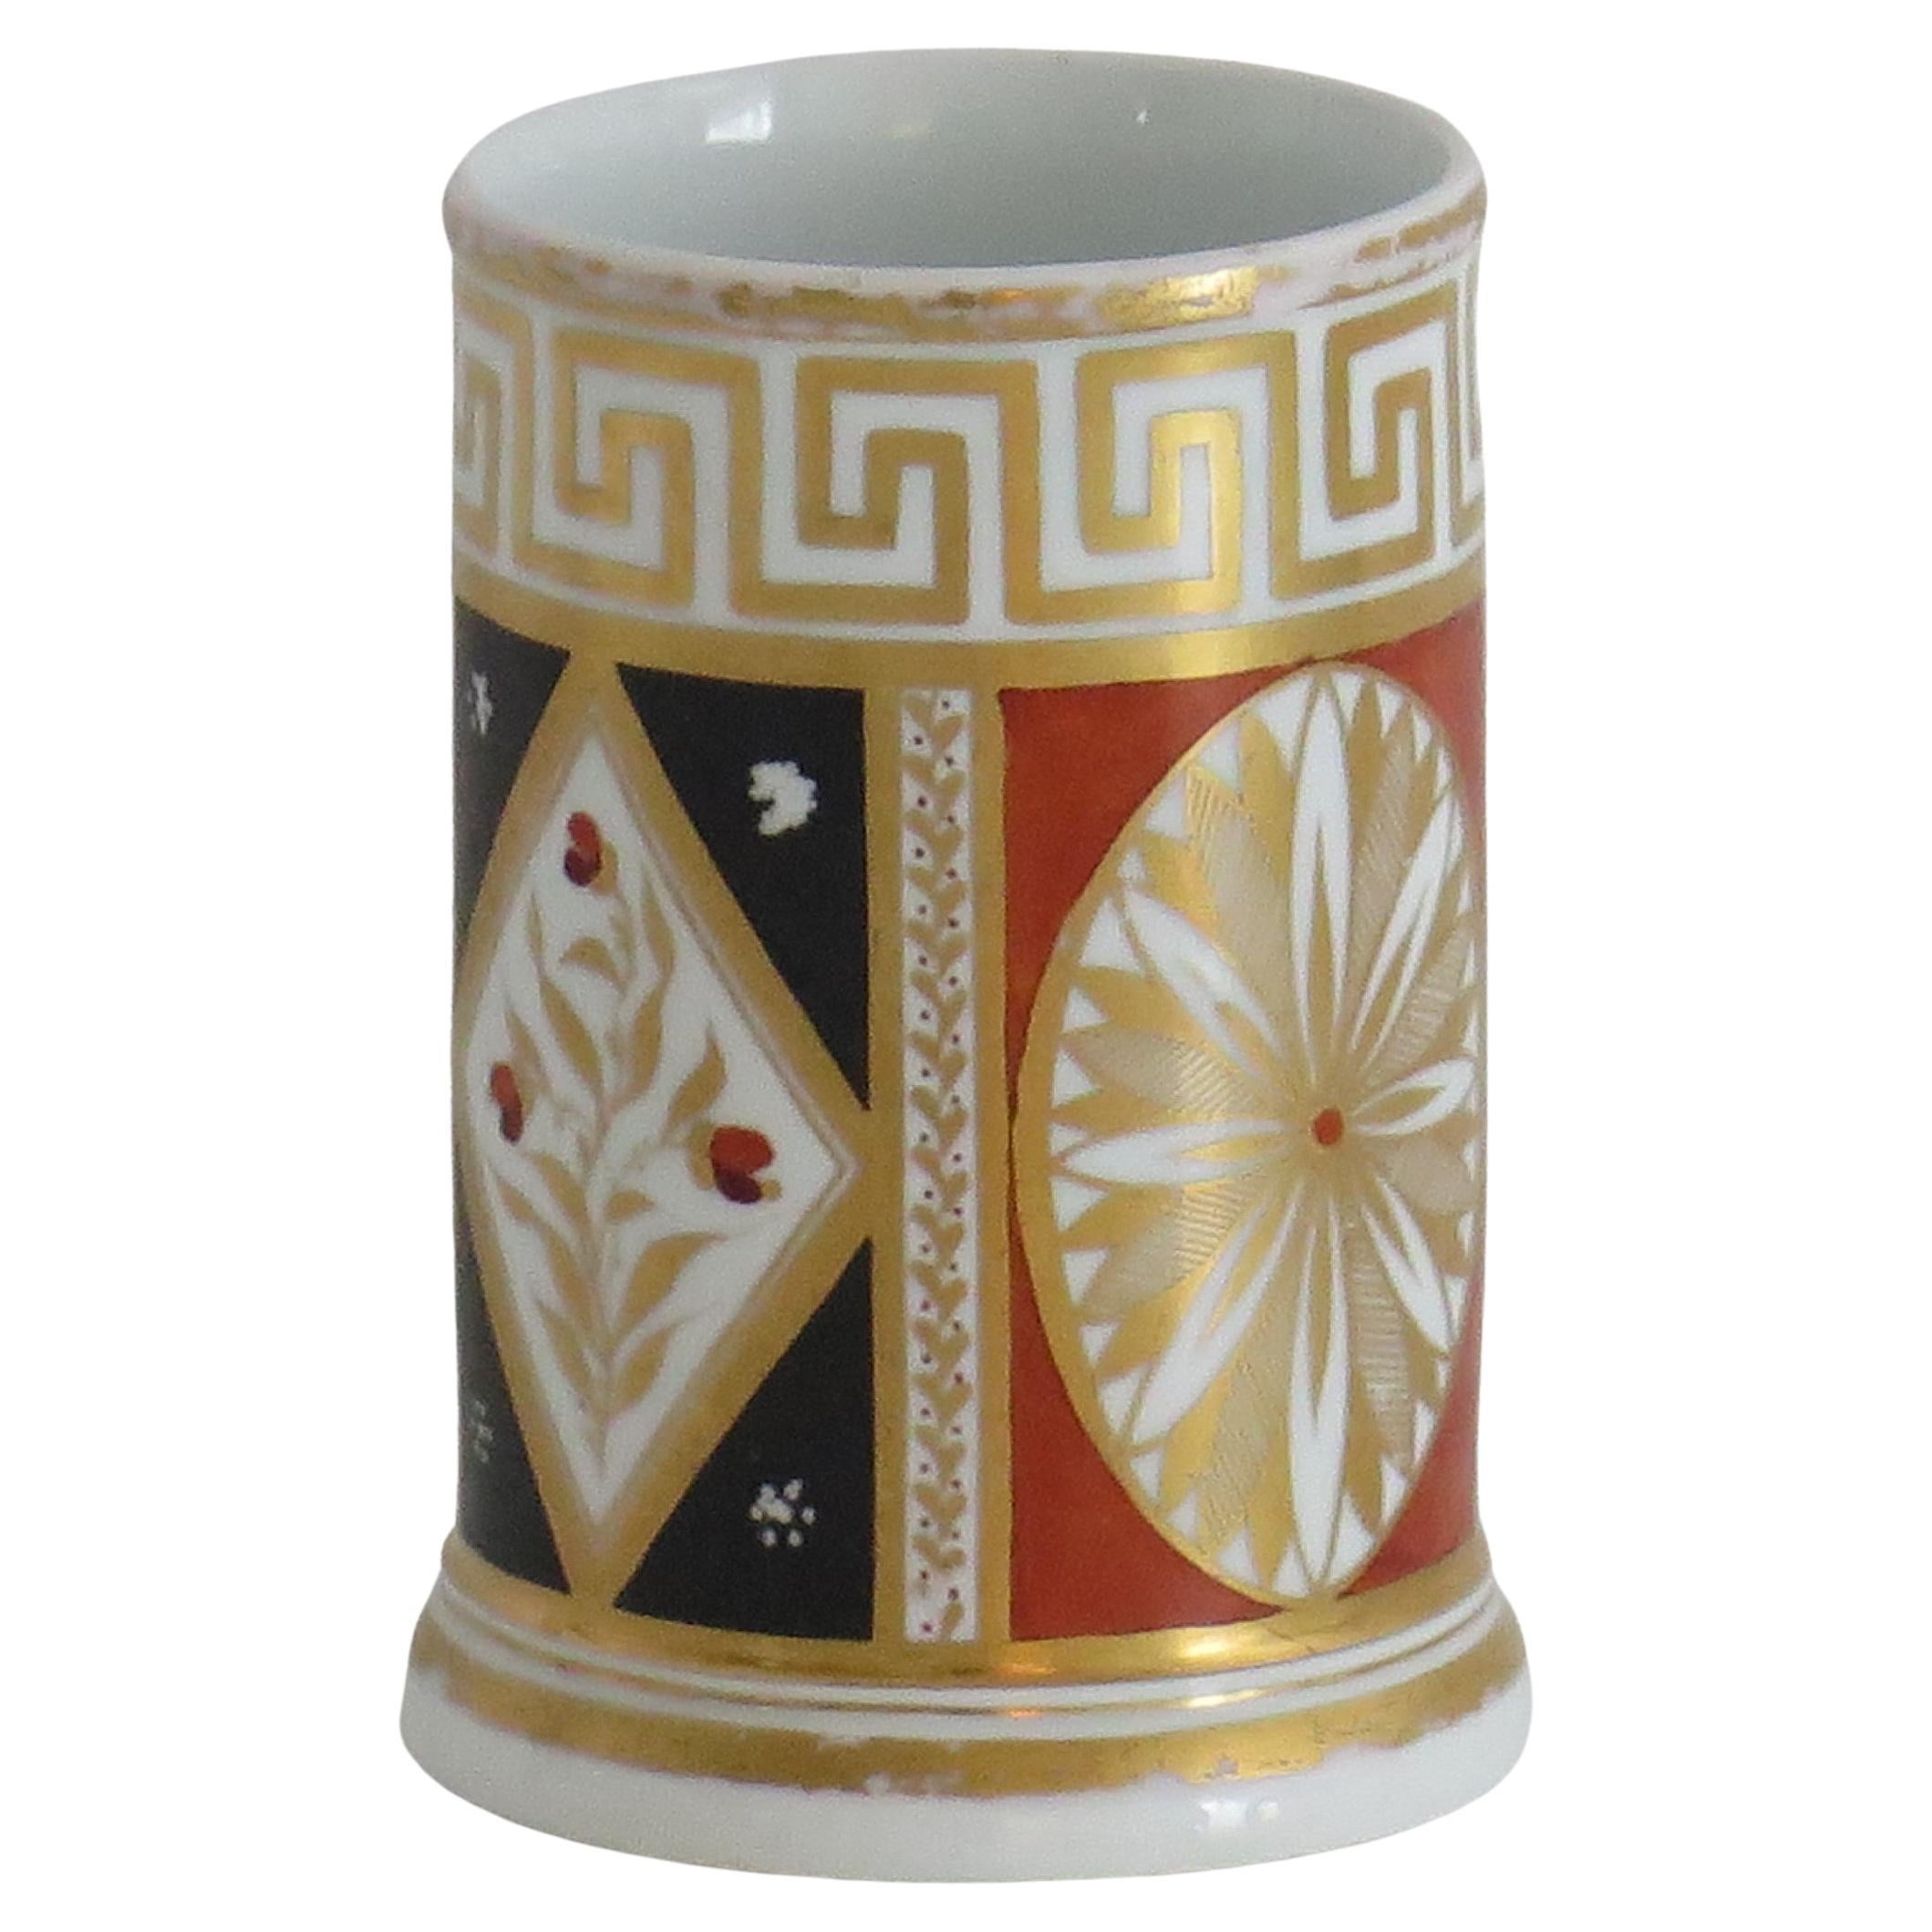 Coalport porcelain Spill Vase in Greek Key Pattern No. 90, circa 1810